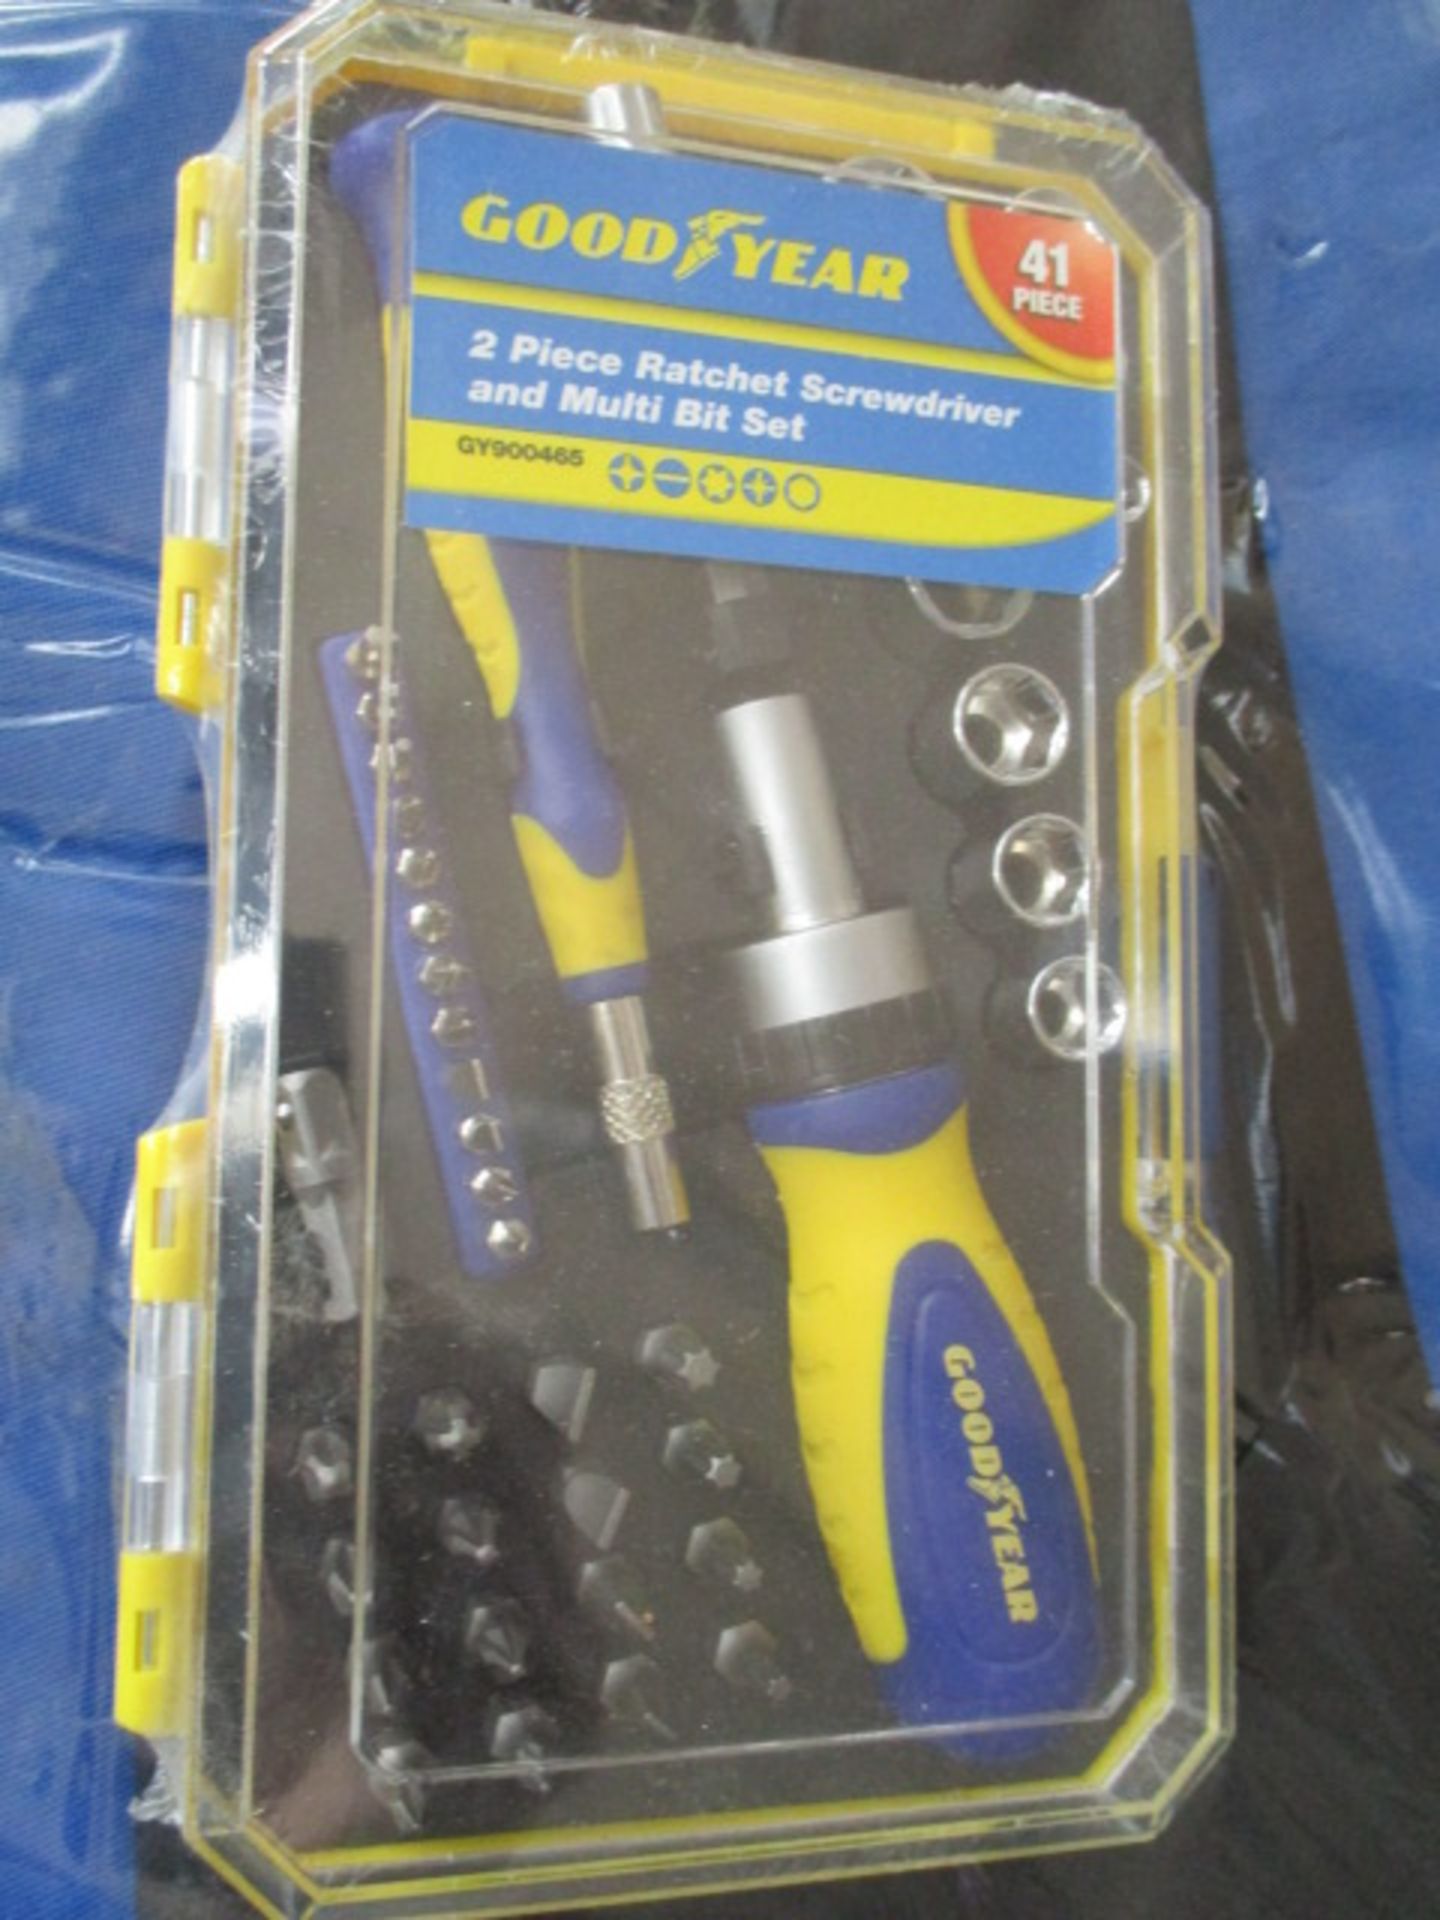 Brand new Goodyear Ratchet screwdriver 41pc set - rrp £26.99 .